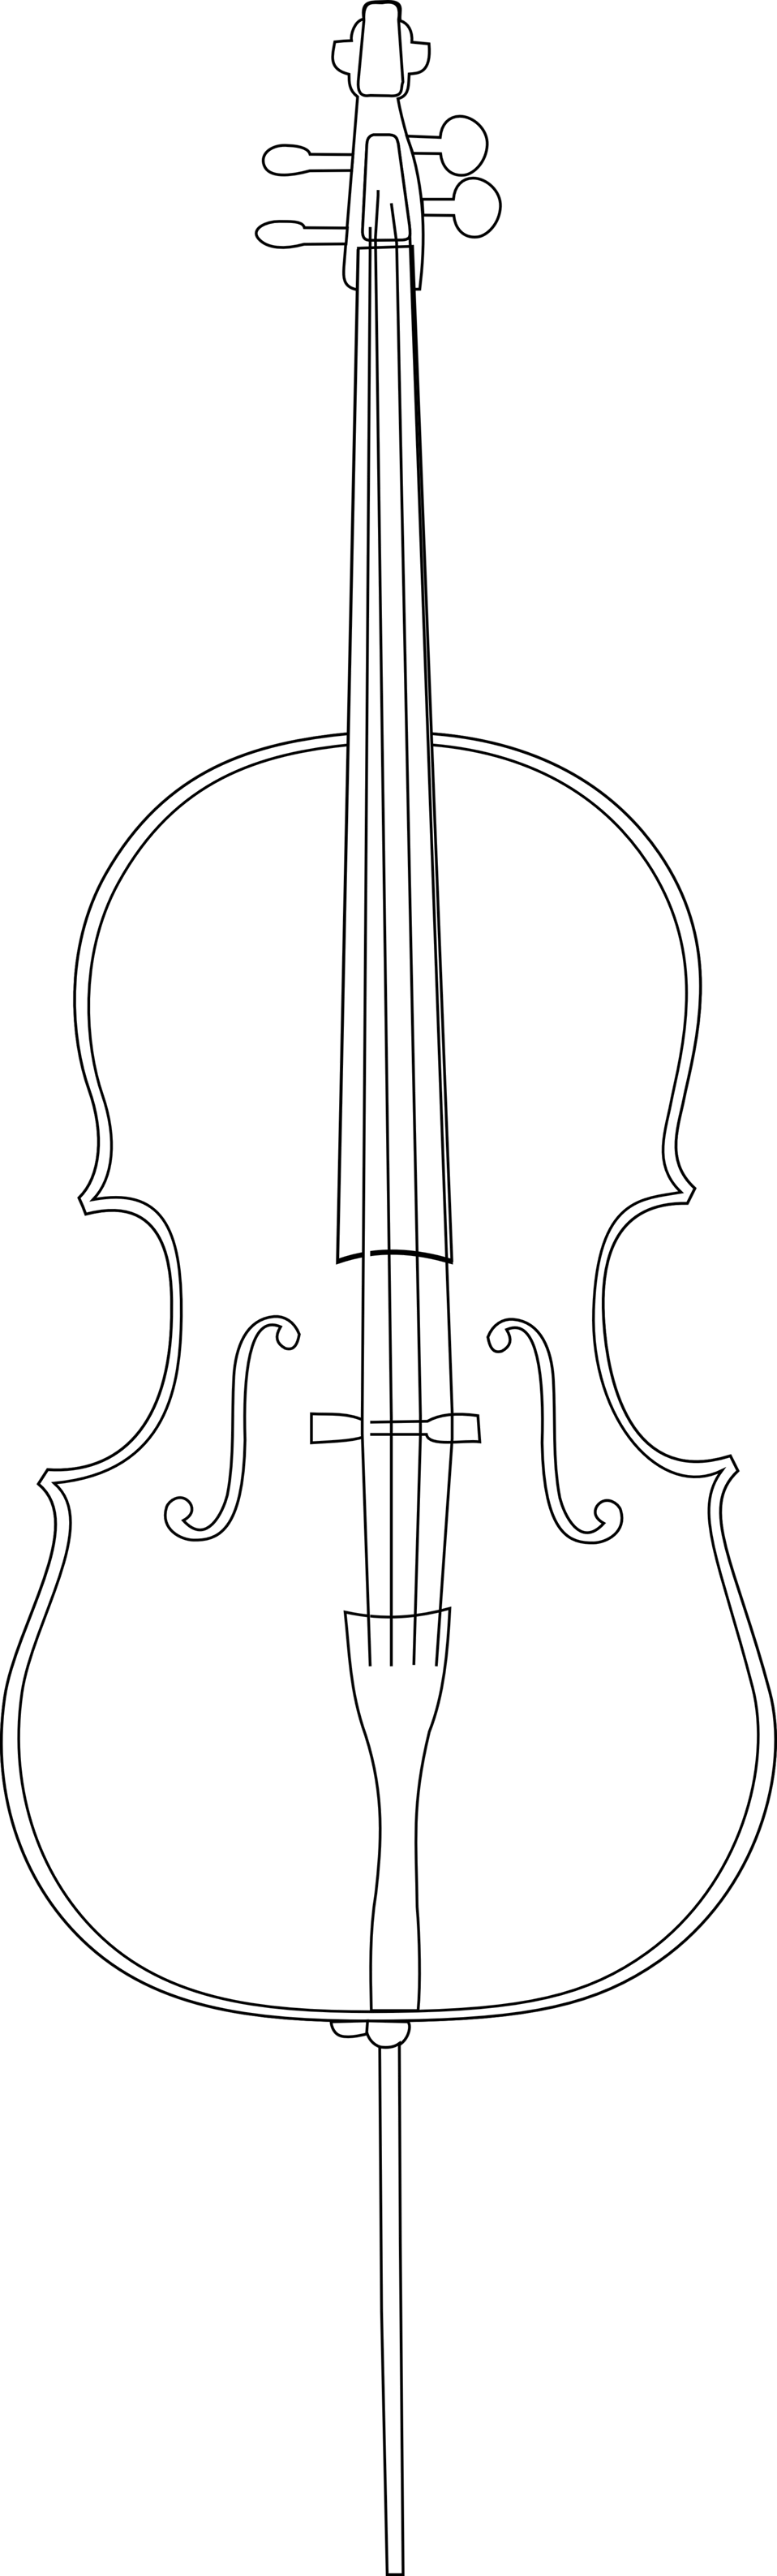 instruments clipart cello